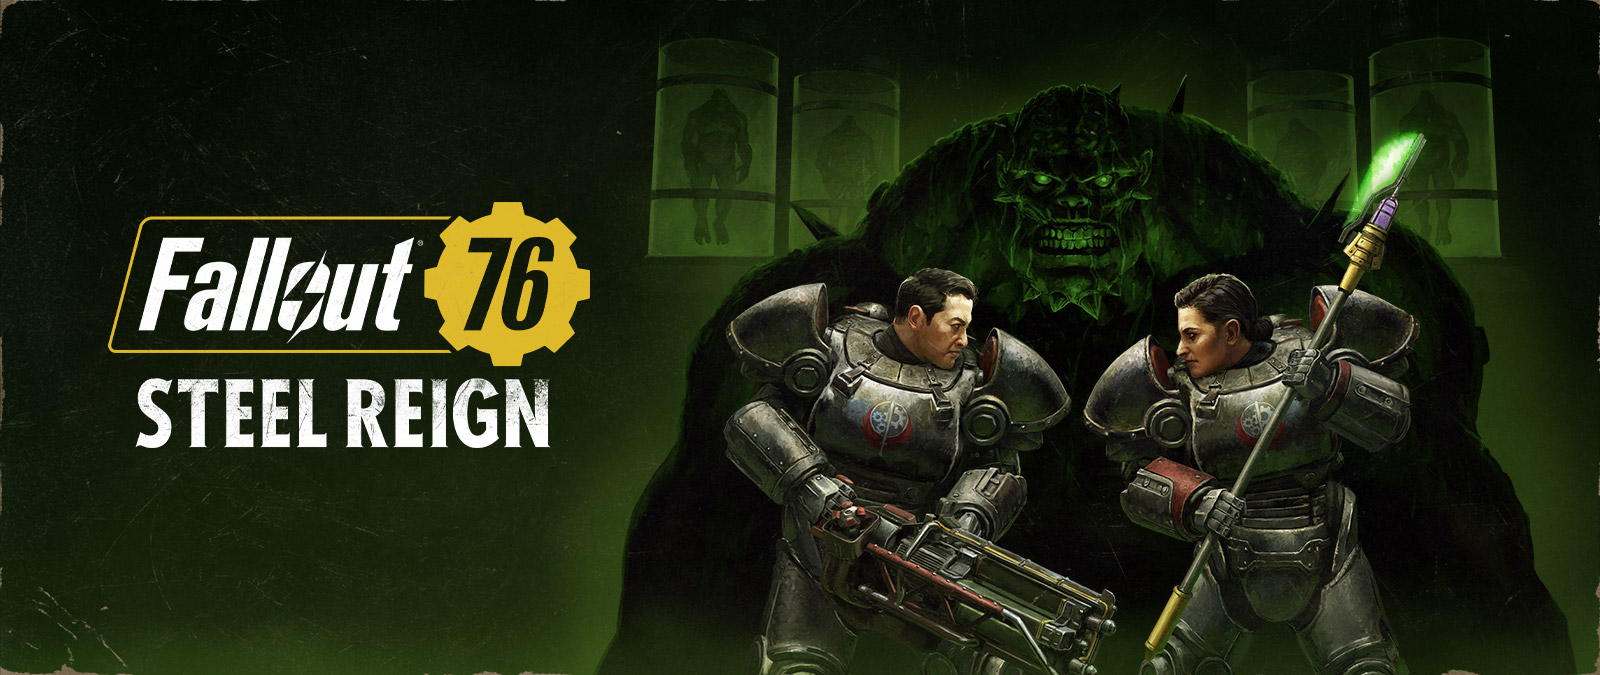 Fallout 76, Steel Reign, δύο χαρακτήρες με μηχανικές στολές έρχονται αντιμέτωποι, με έναν μεγάλο τέρας στο φόντο.